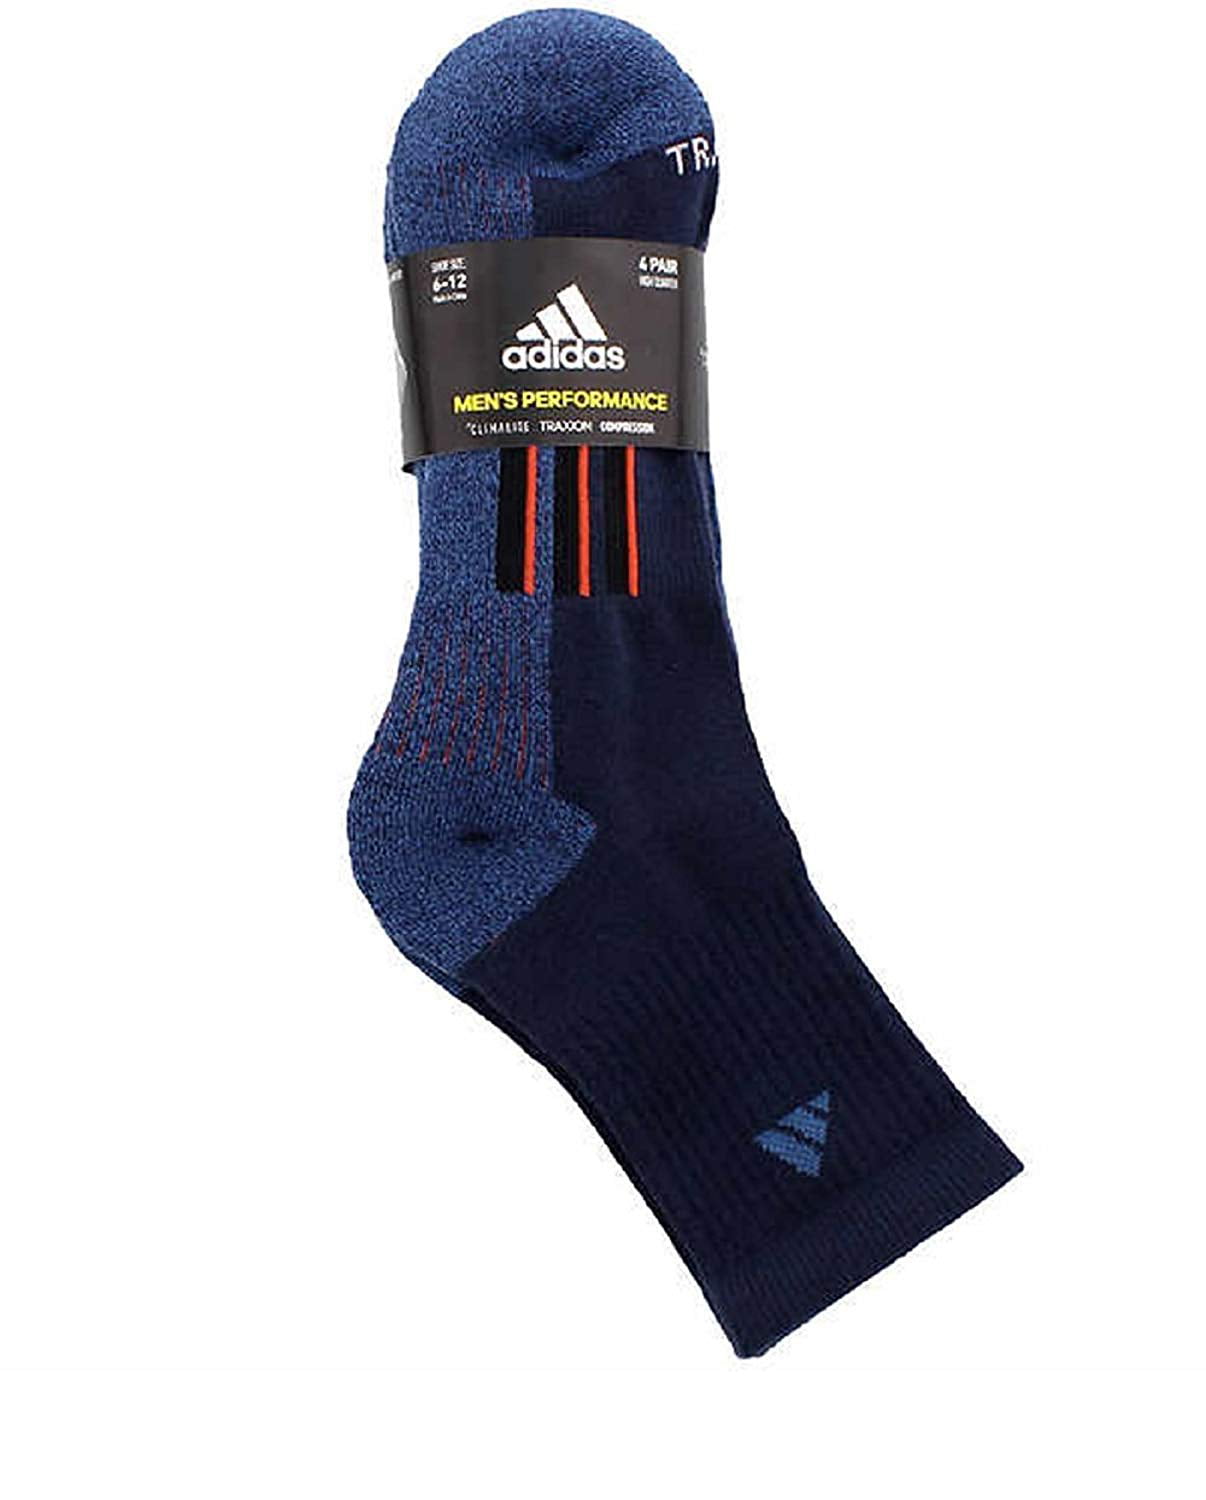 Adidas Men's Performance Climalite High Quarter Compression Crew Socks